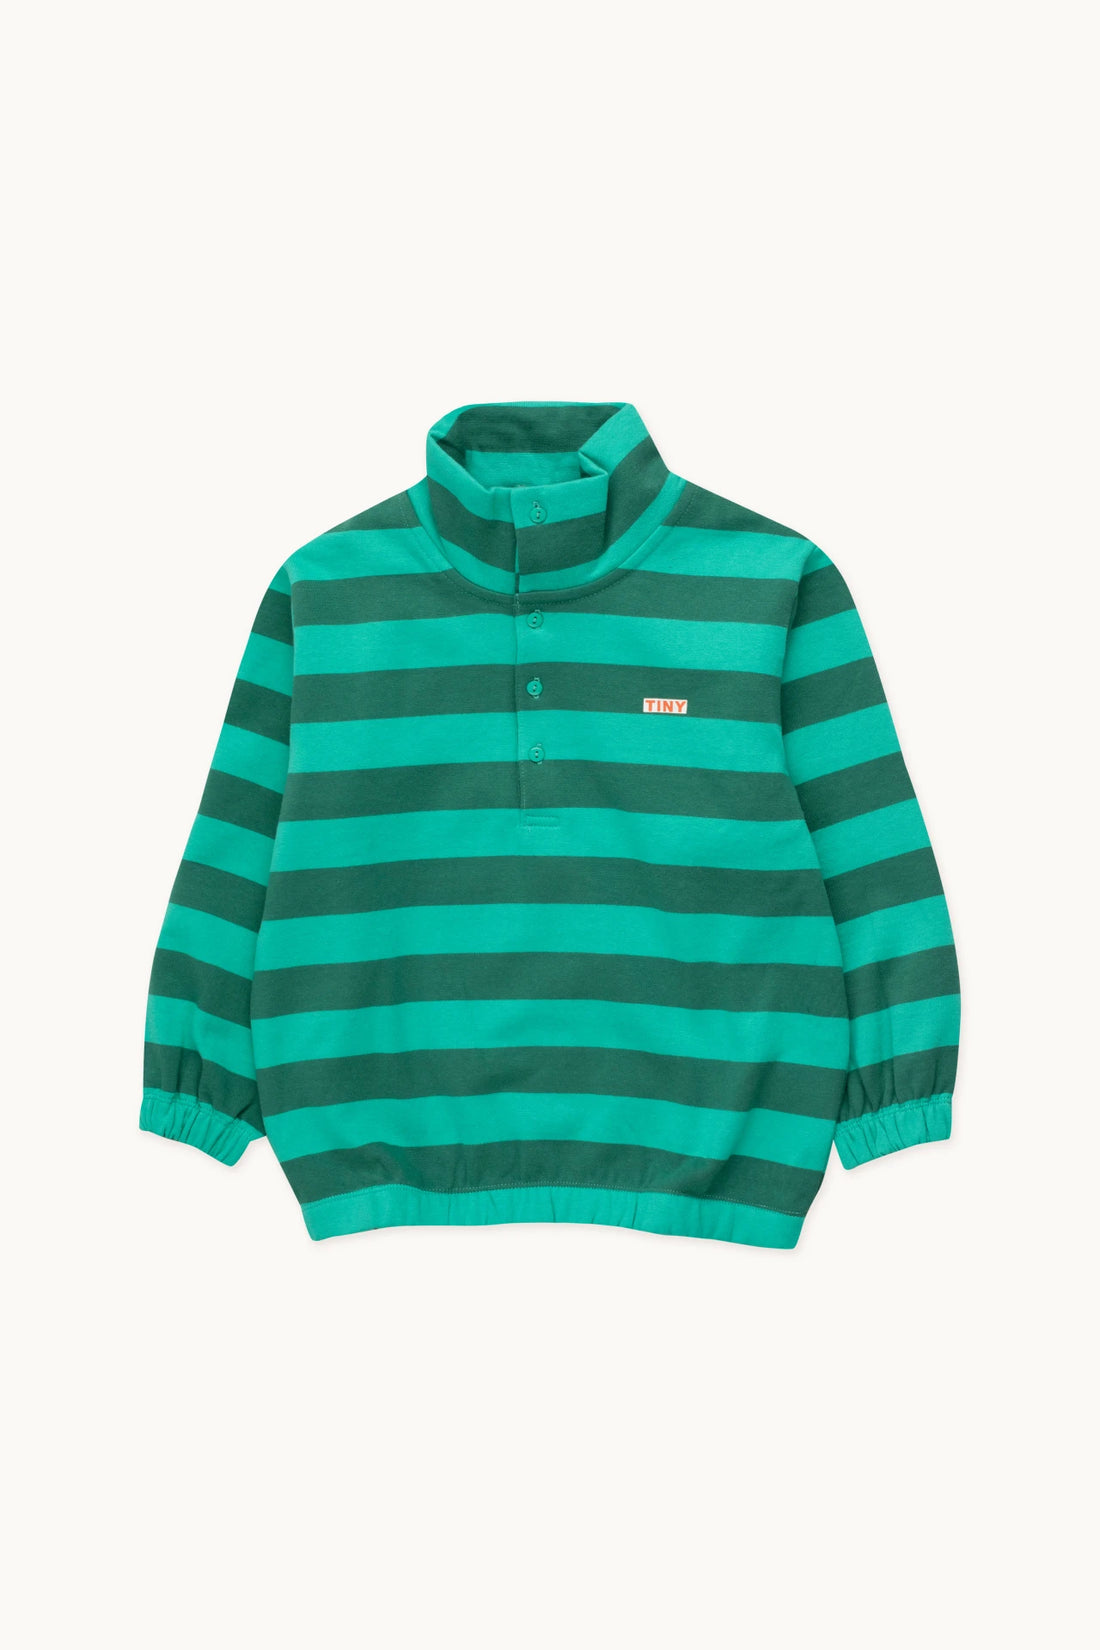 Tiny Cottons - stripes mockneck sweatshirt - emerald/dark green